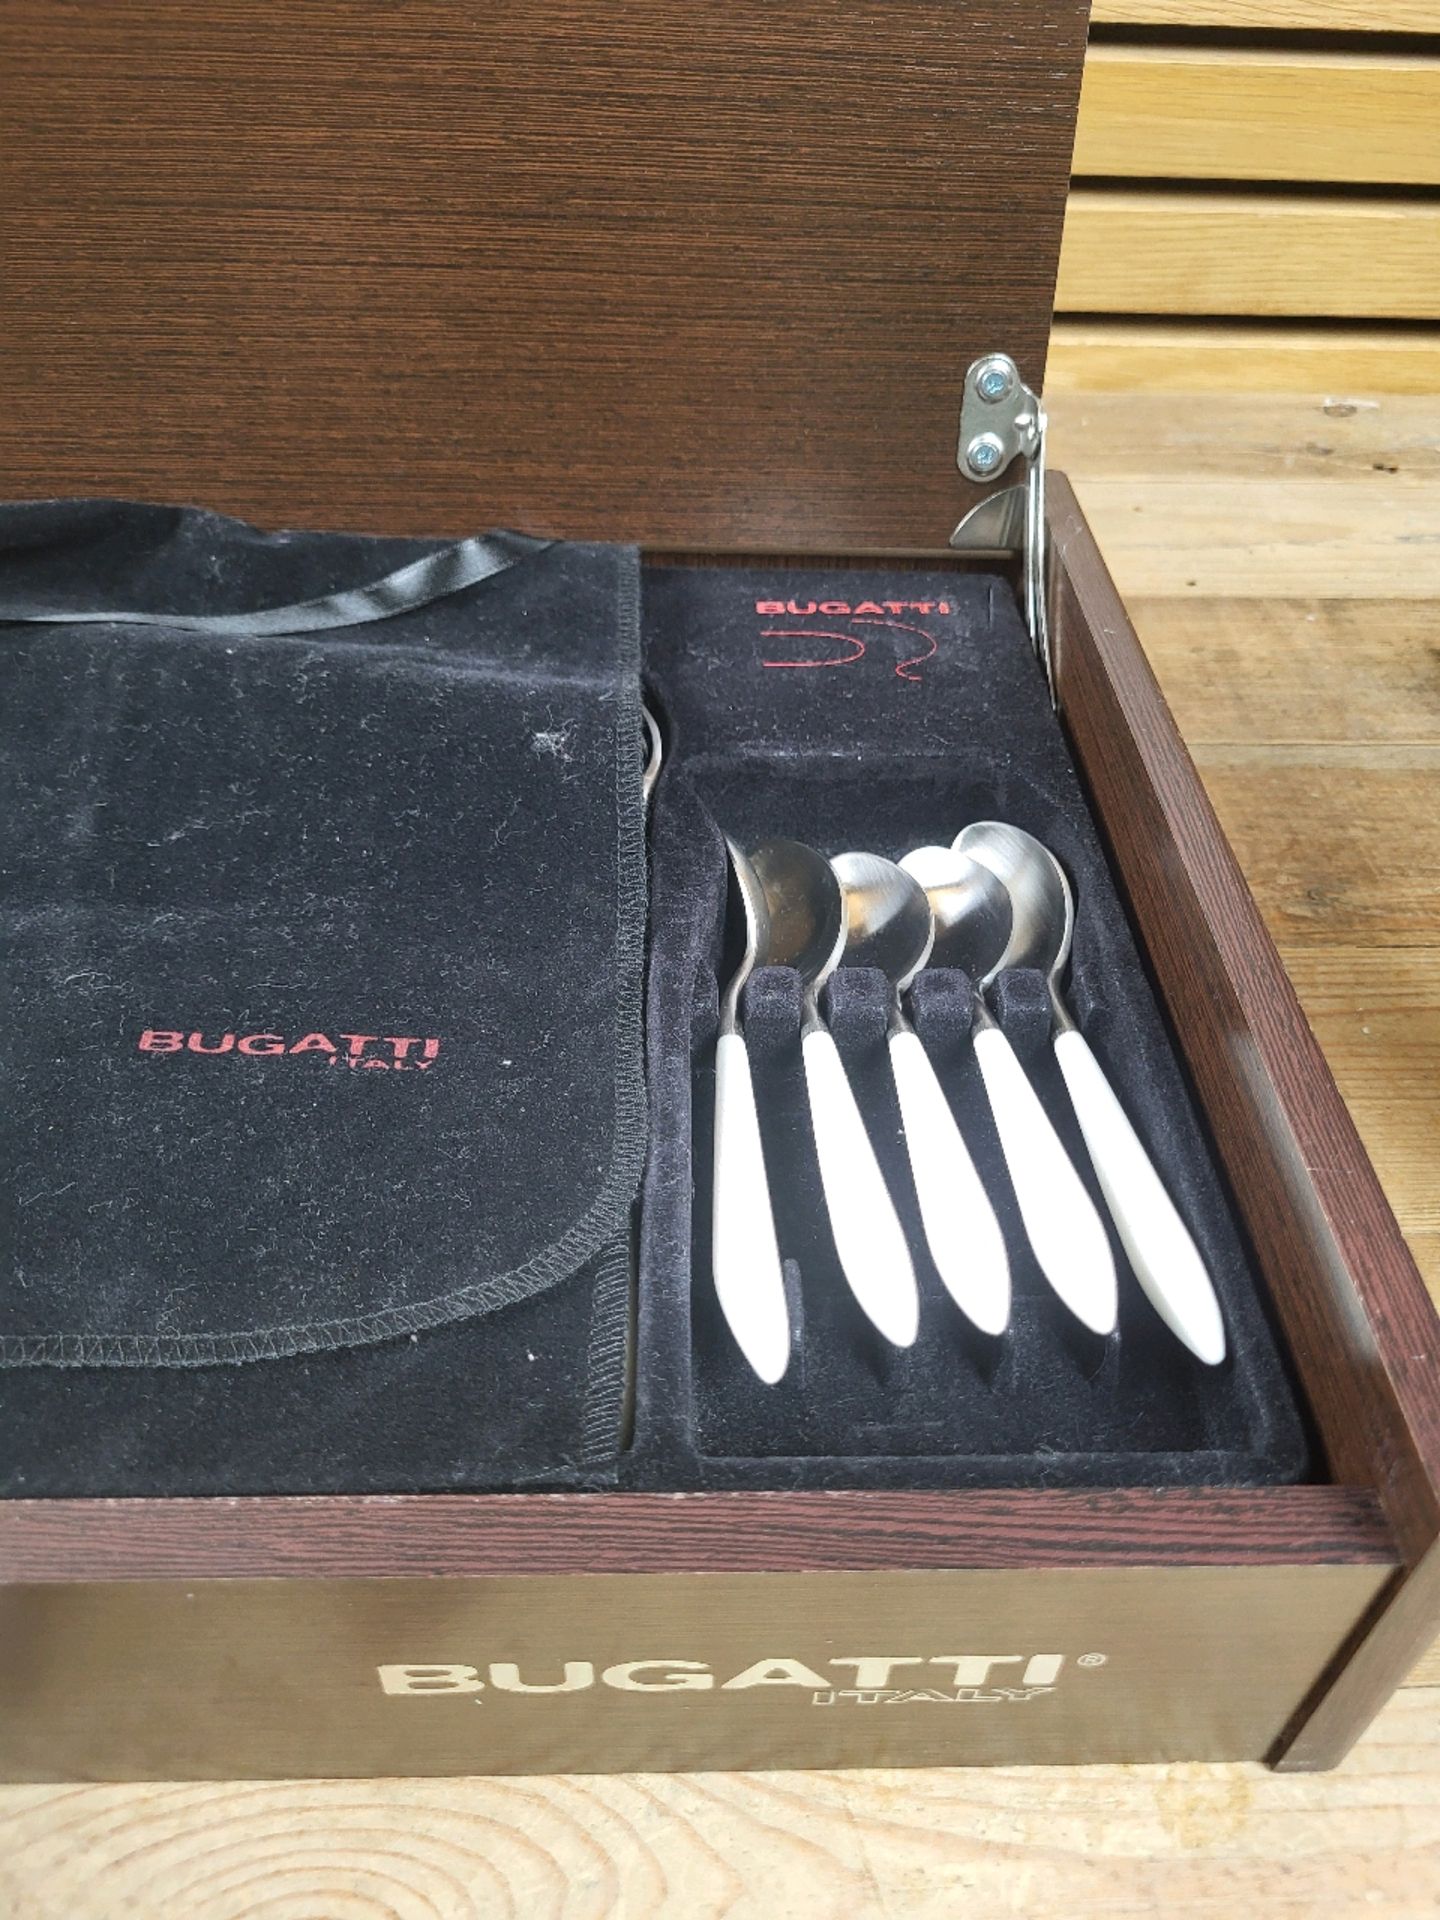 Bugatti 24 piece Cutlery Set - Image 3 of 3